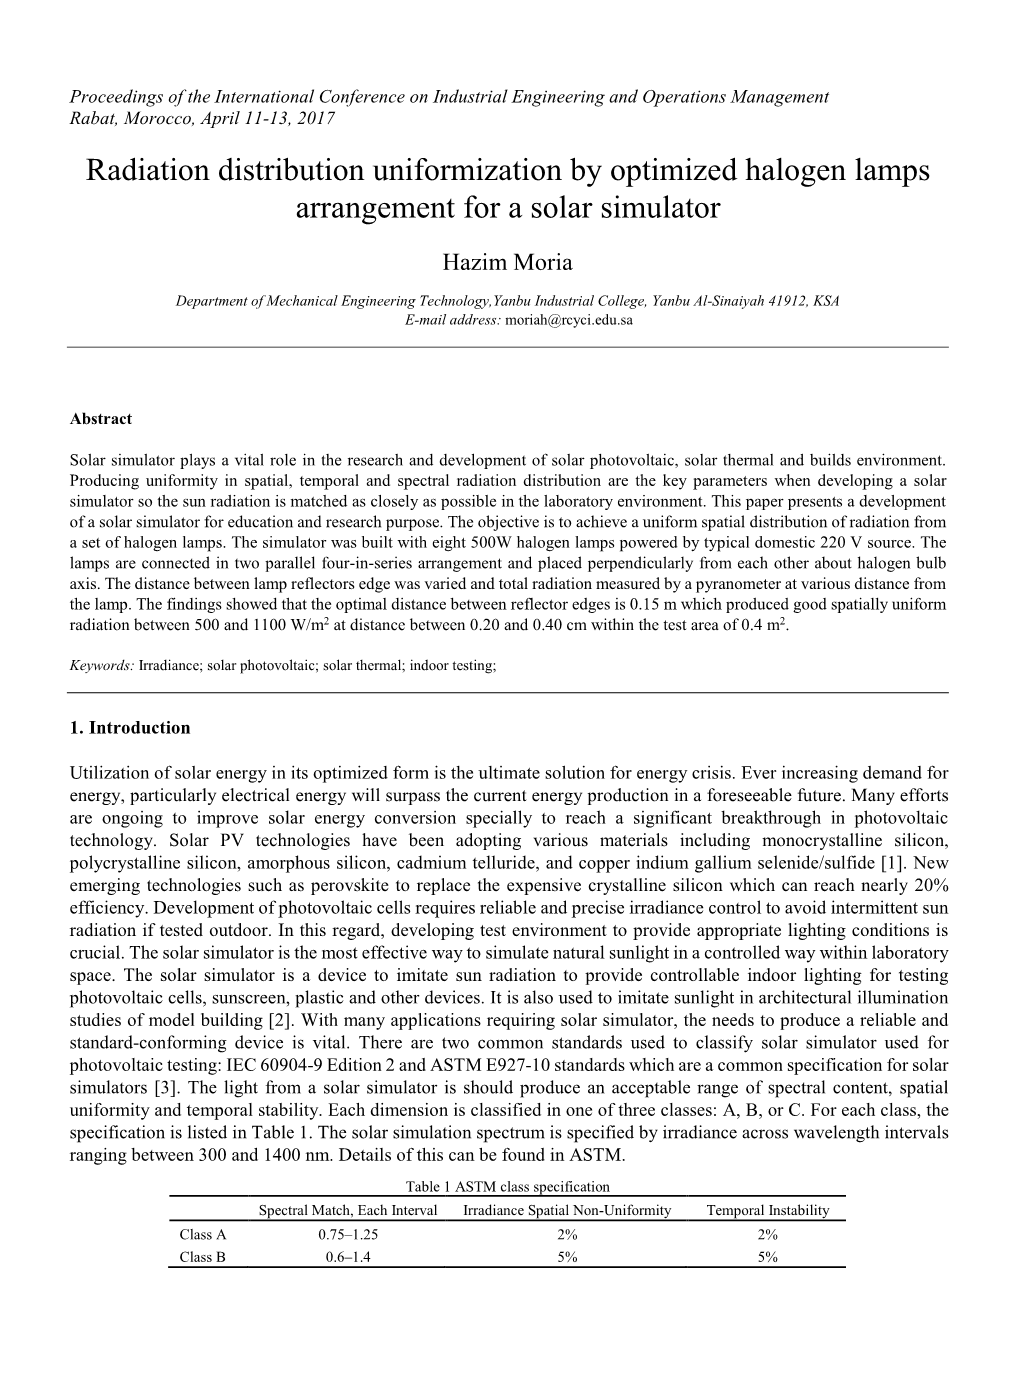 Radiation Distribution Uniformization by Optimized Halogen Lamps Arrangement for a Solar Simulator